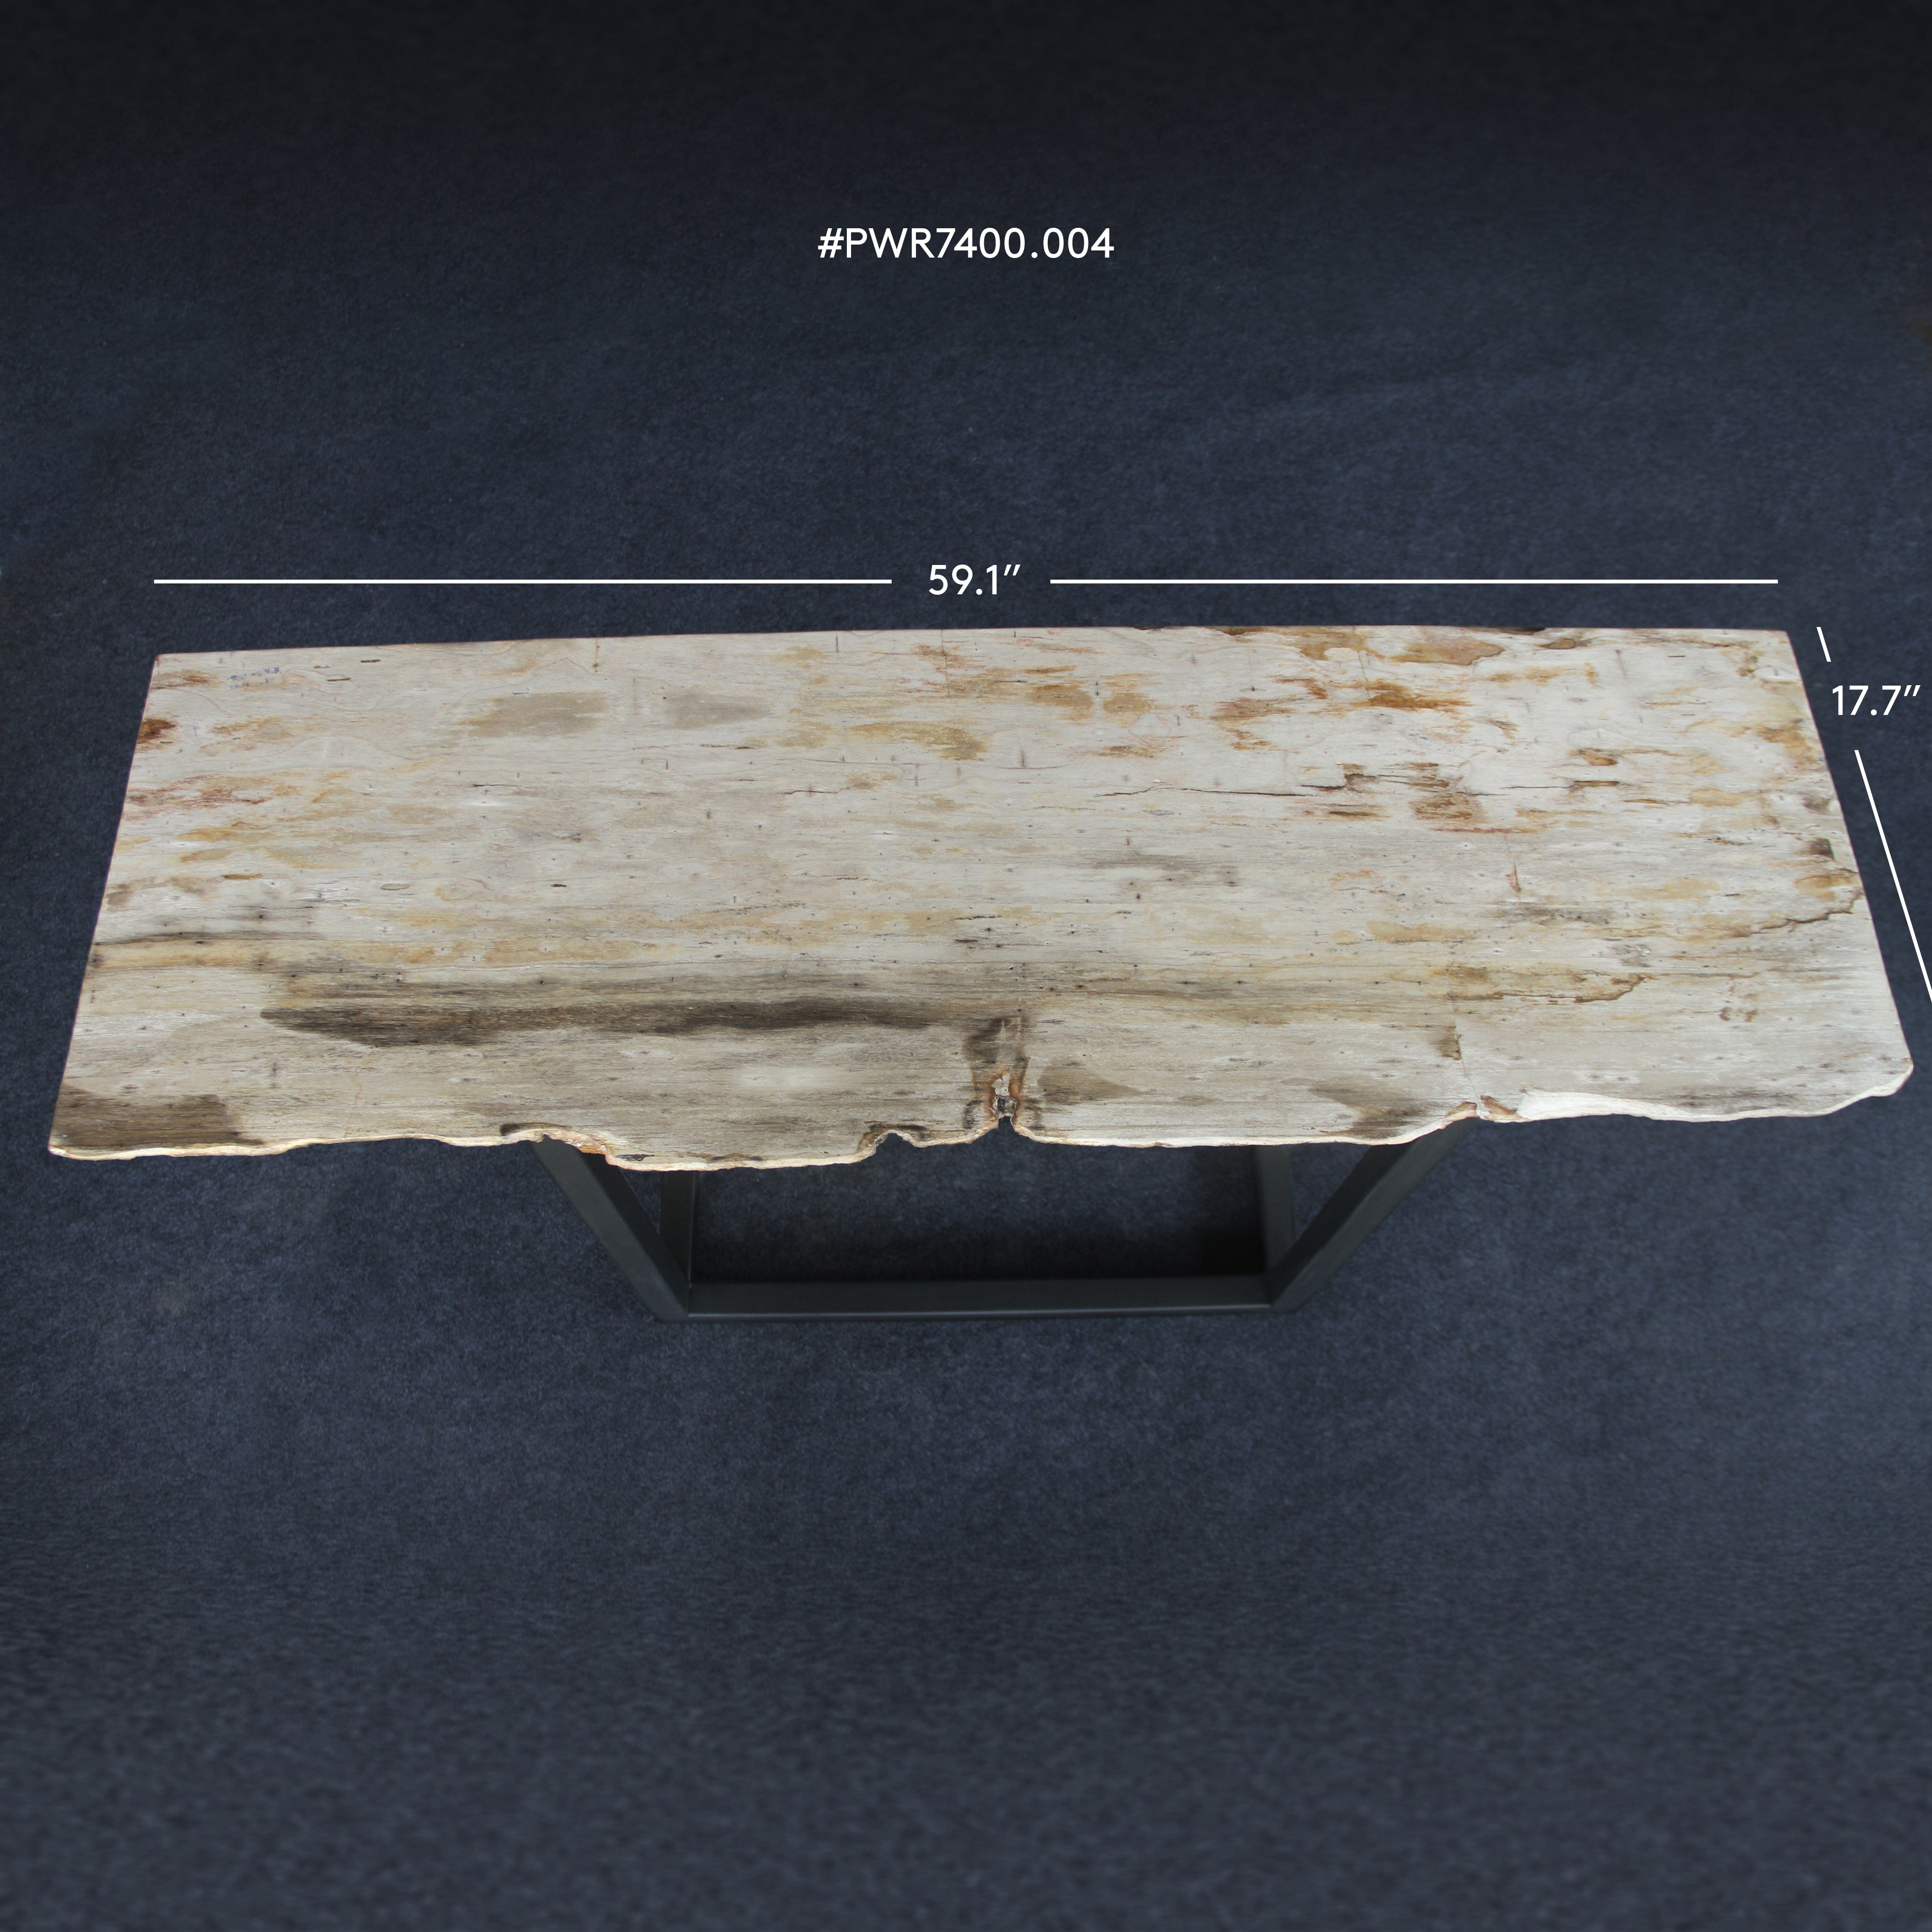 Kalifano Petrified Wood Petrified Wood Console Table 59" / 143 lbs PWR7400.004